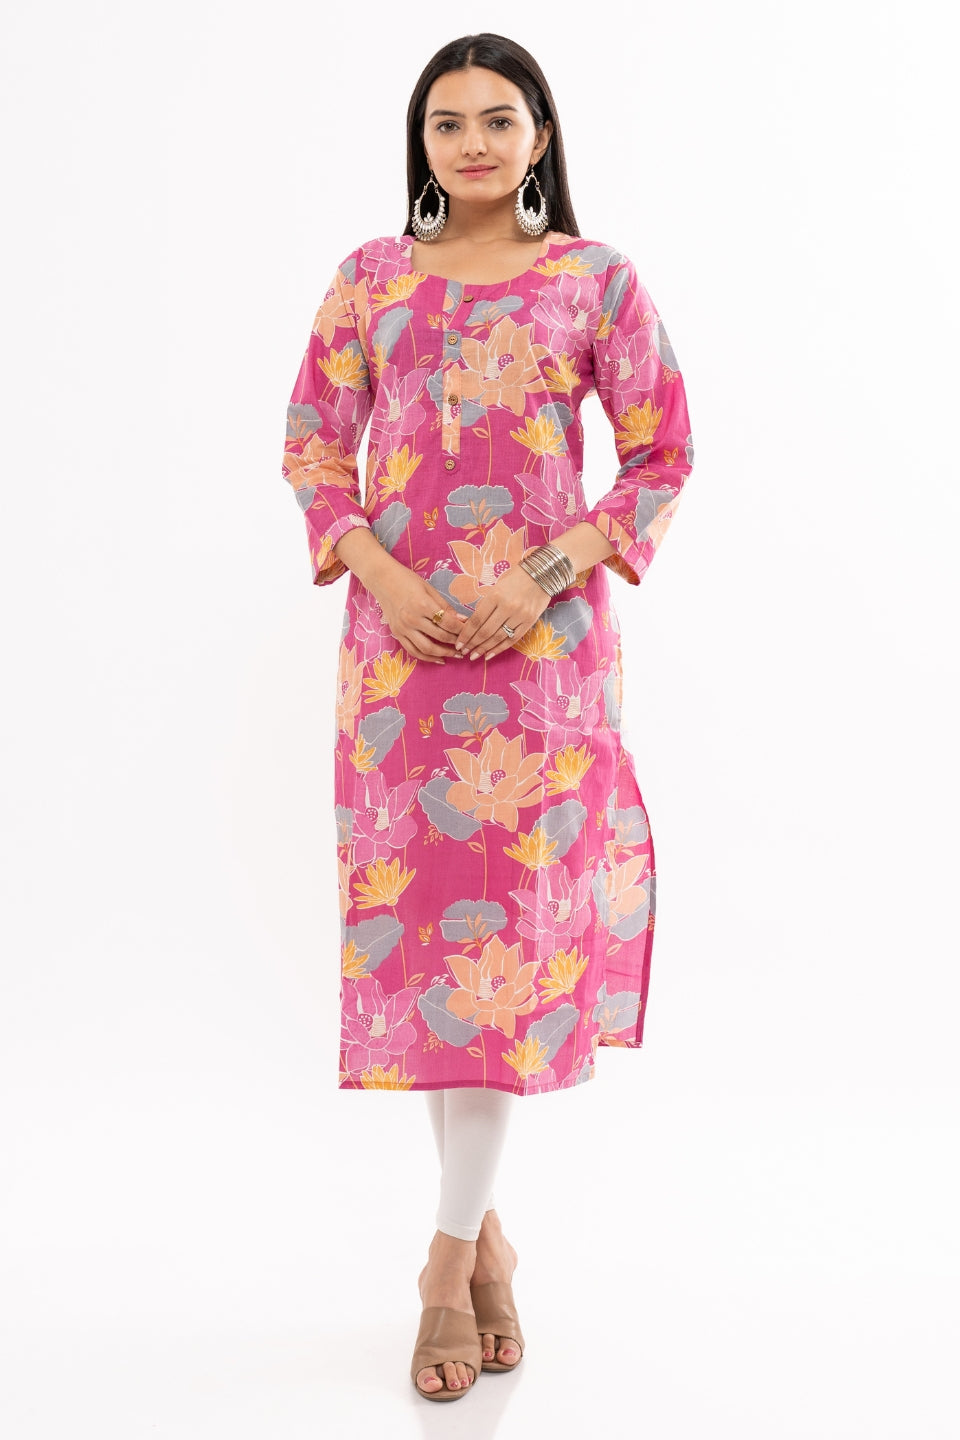 Ekisha women's cotton pink printed straight floral kurta kurti round neck, front view